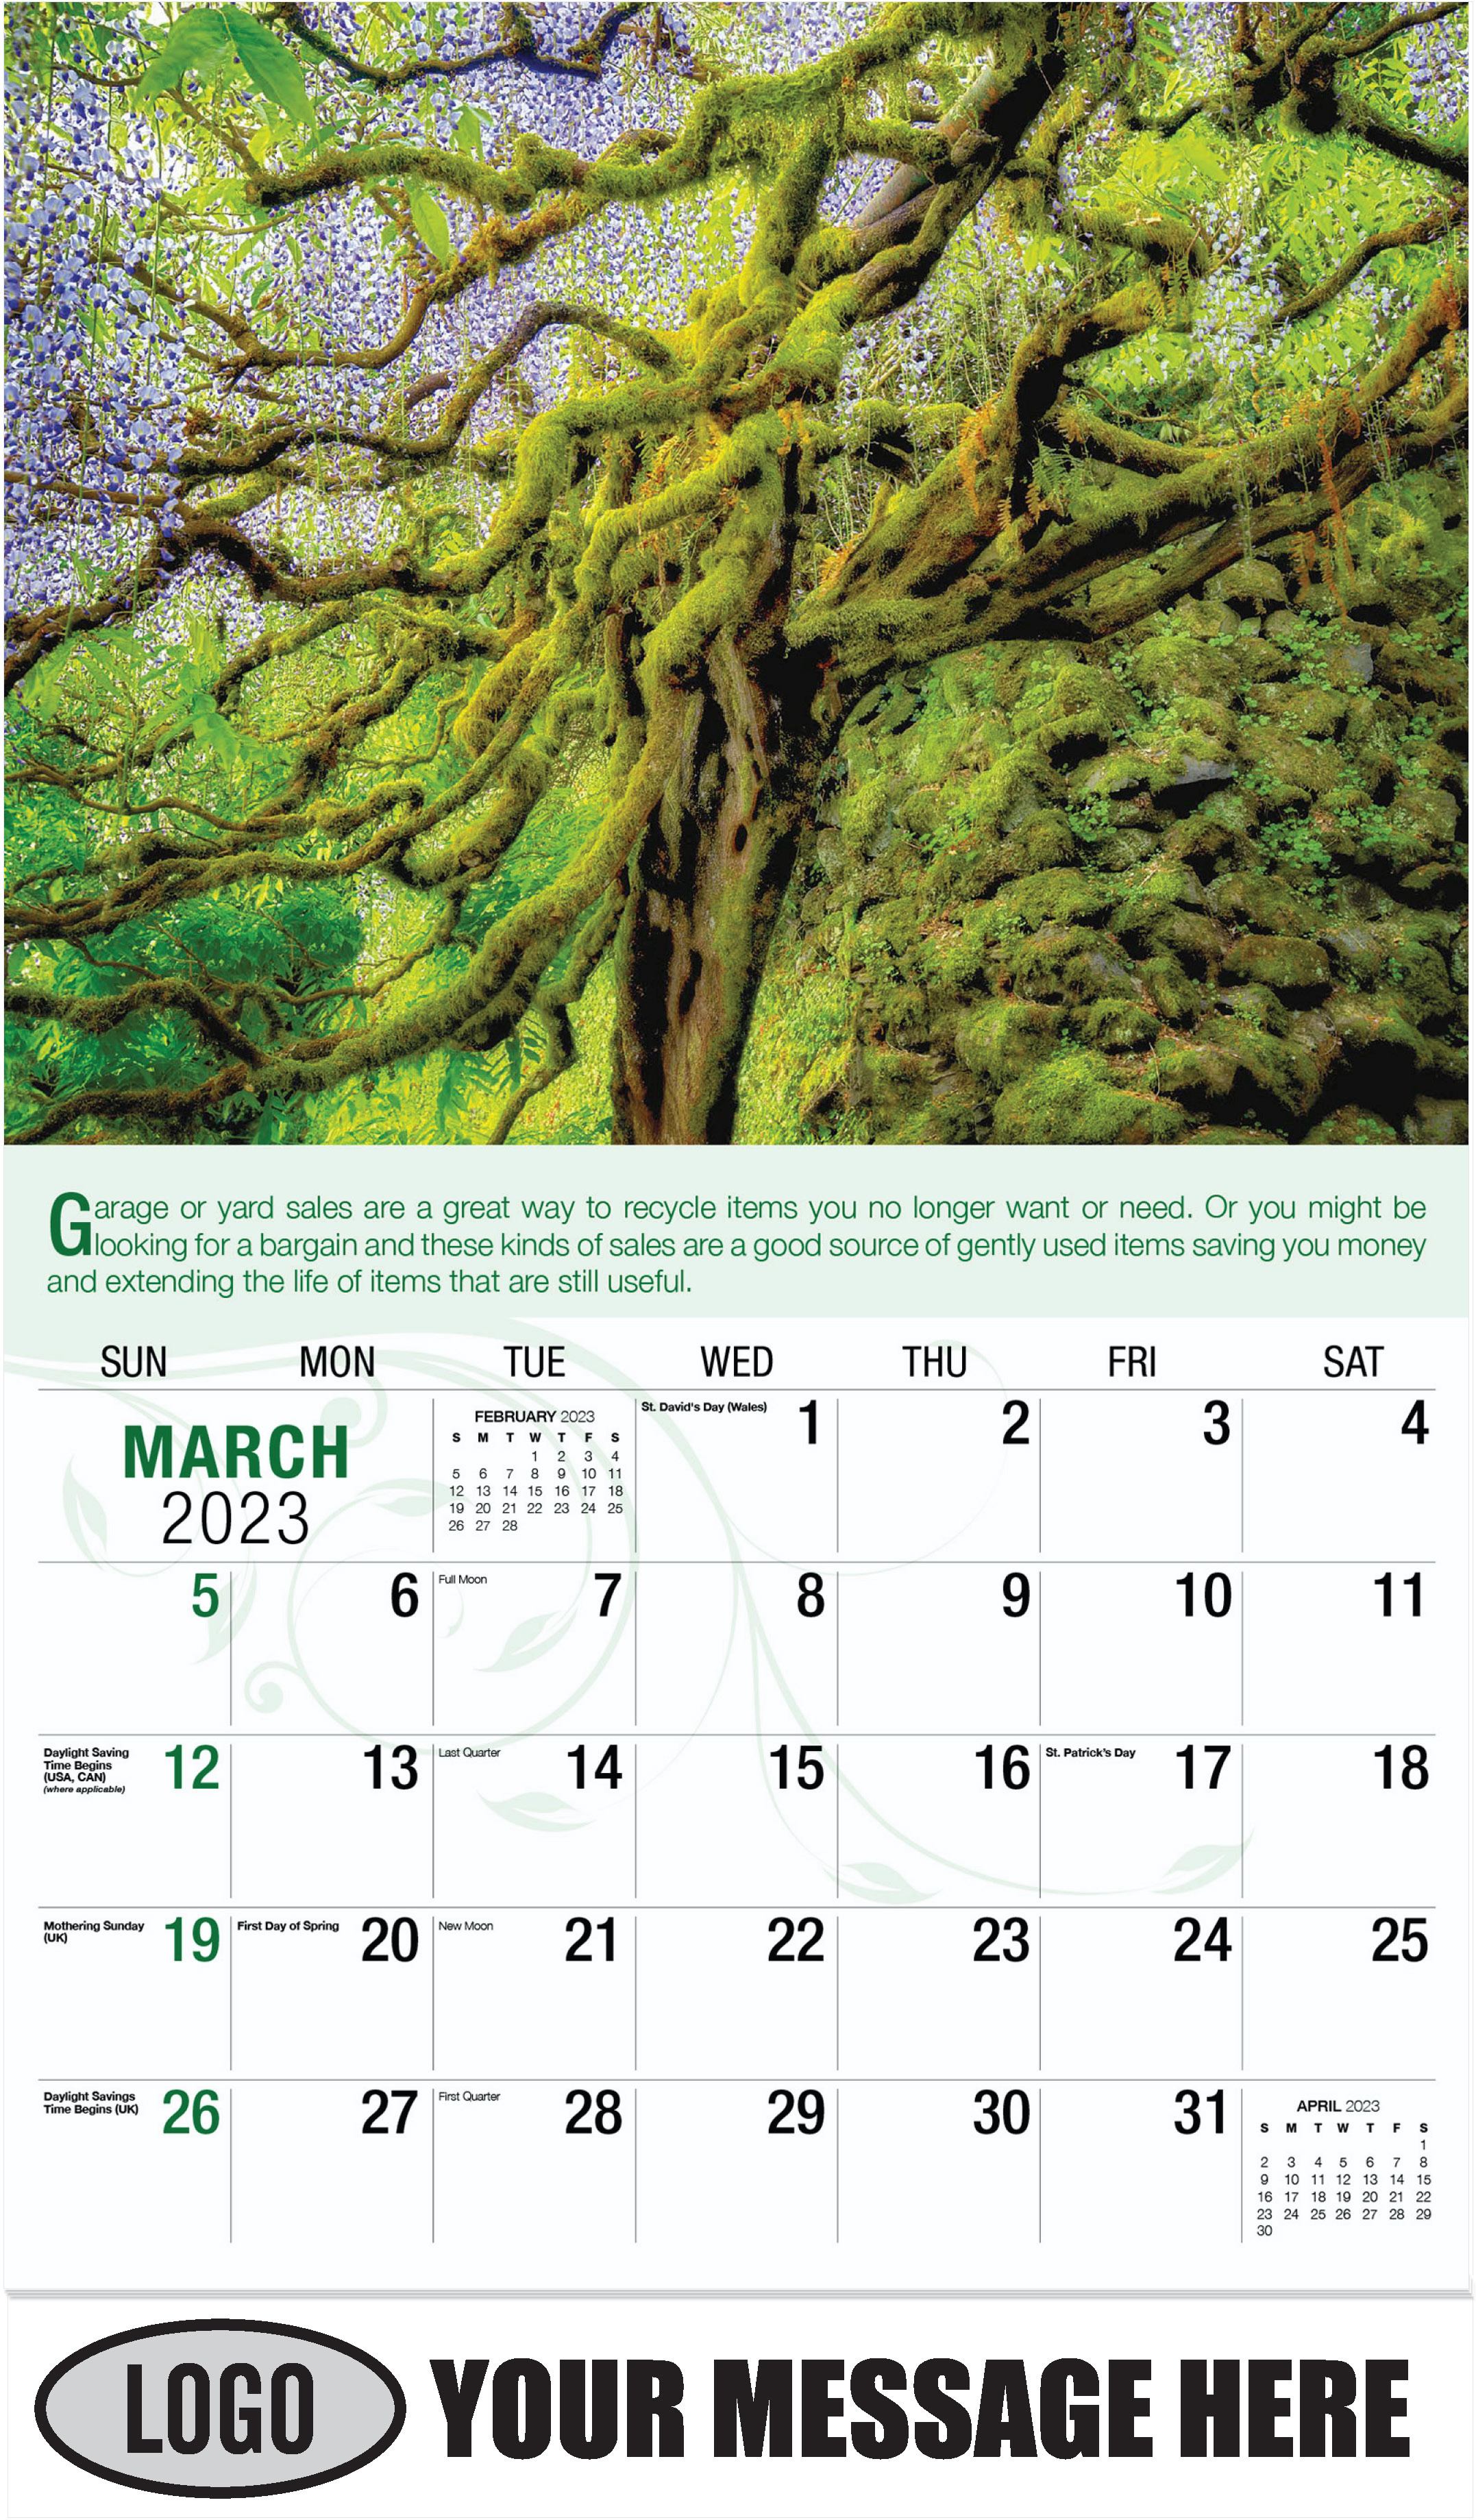 Wisteria, Portland, Oregon - March - Go Green 2023 Promotional Calendar